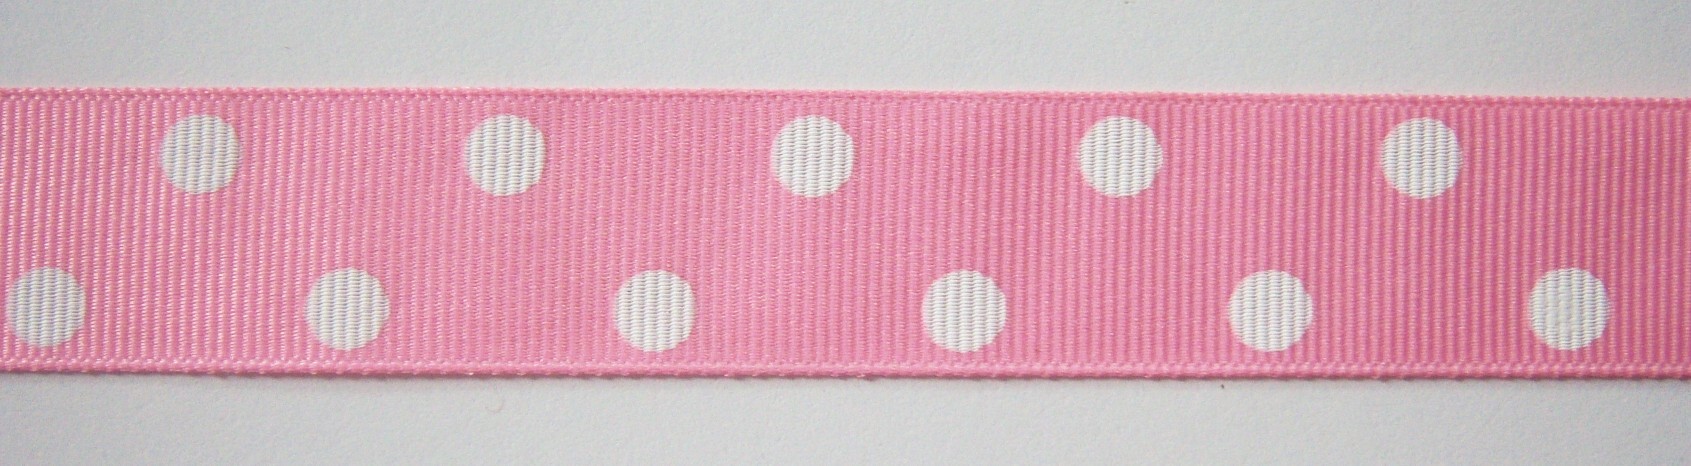 Pink/White Dot 7/8" Grosgrain Ribbon